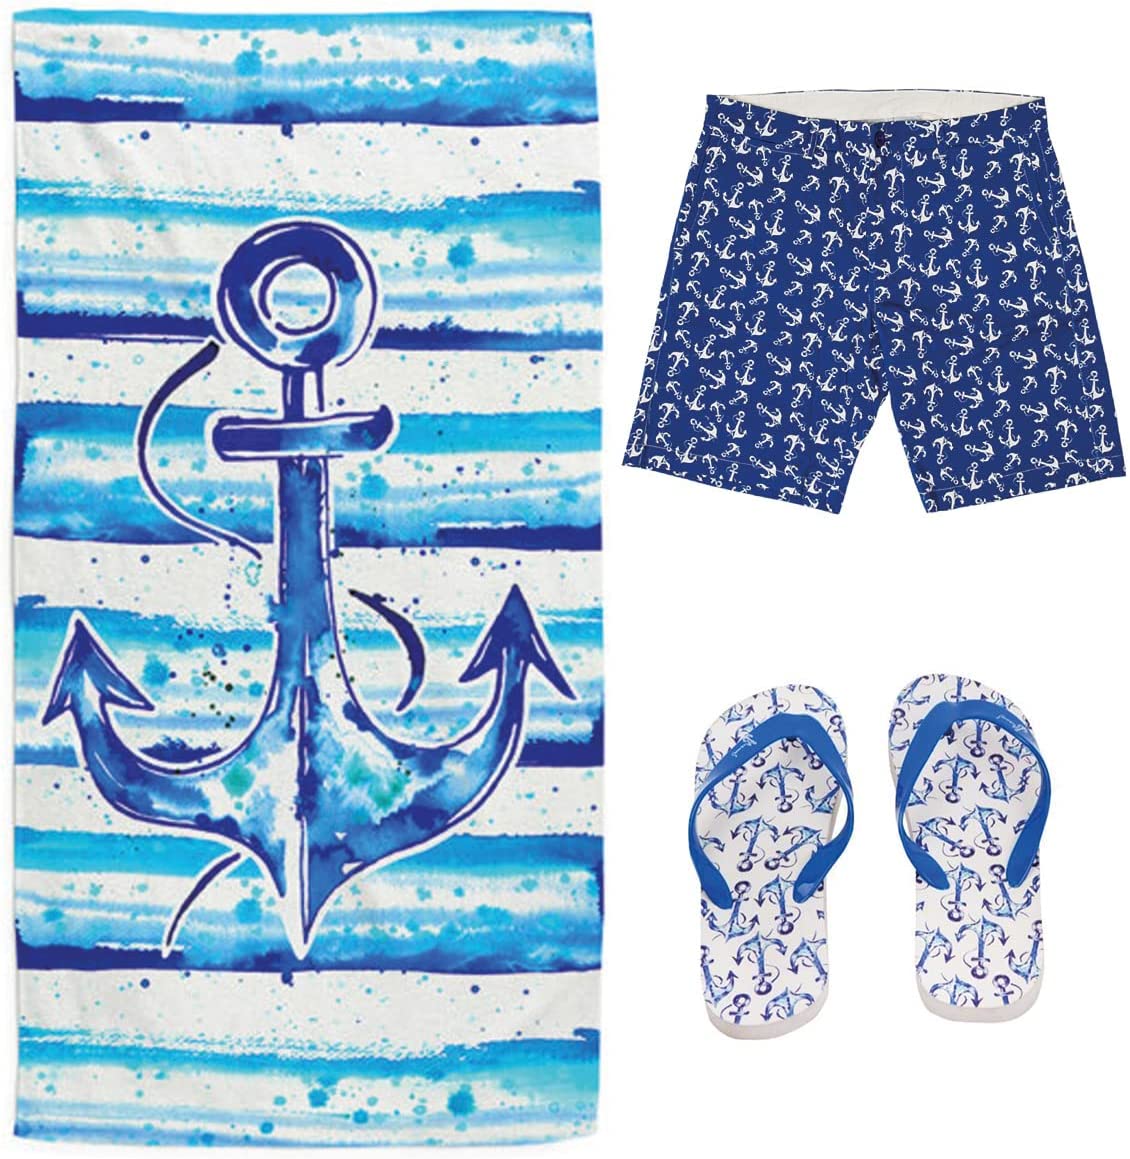 Anchor design beach towel   anchor design mid-rise medium shorts   anchor design 40-41 size flipflop